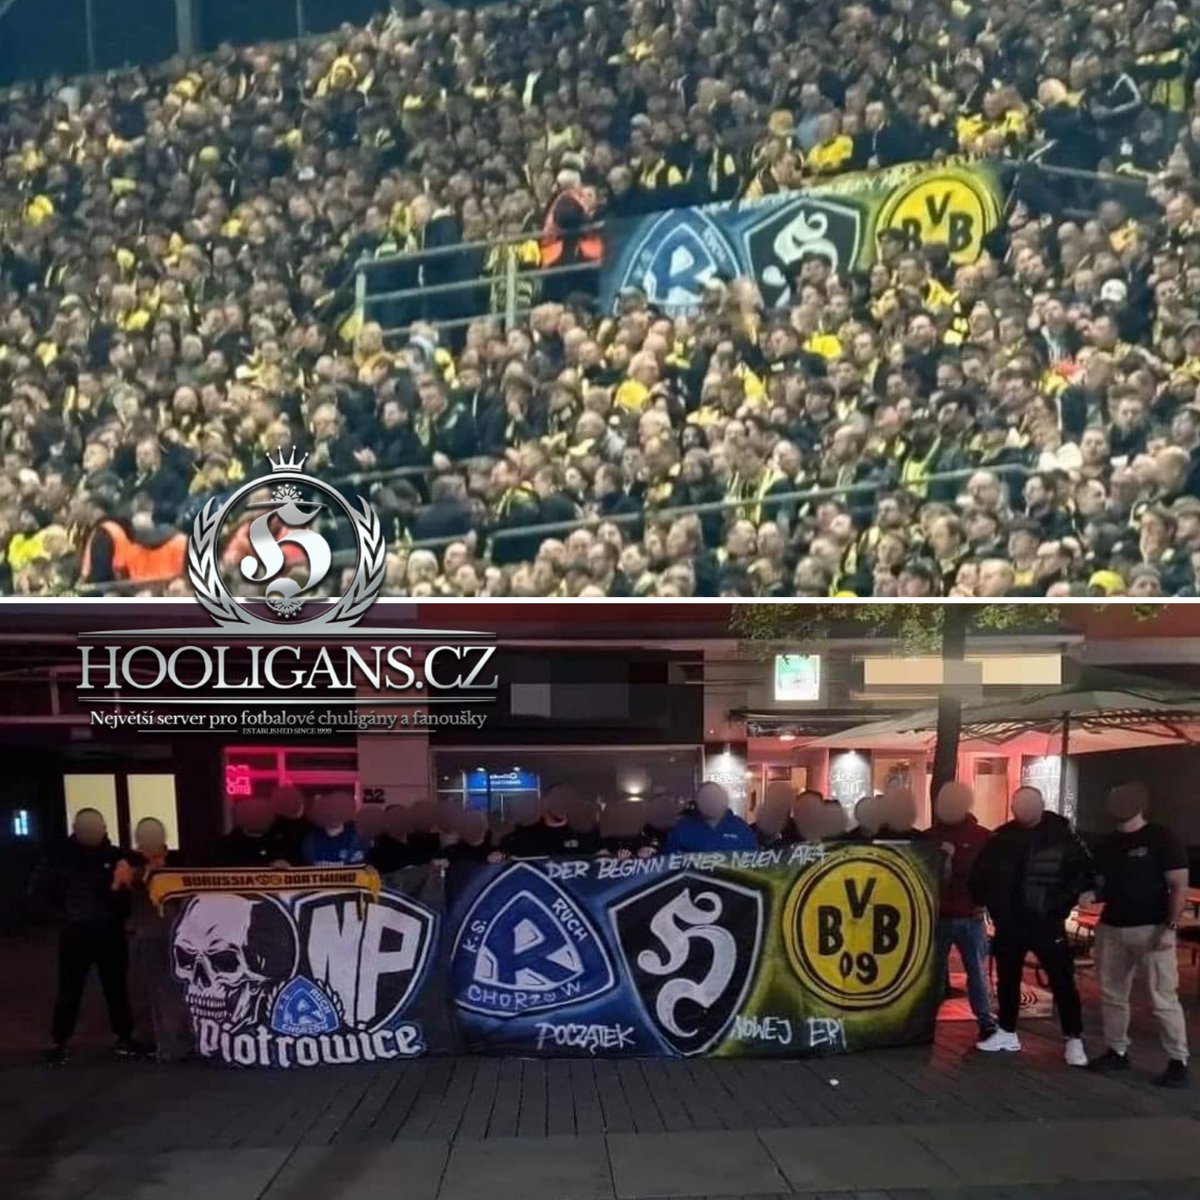 16.04.2024, Borussia Dortmund🇩🇪 - Atletico Madrid🇪🇸, Ruch Chorzów🇵🇱 on the BVB stand hooligans.cz